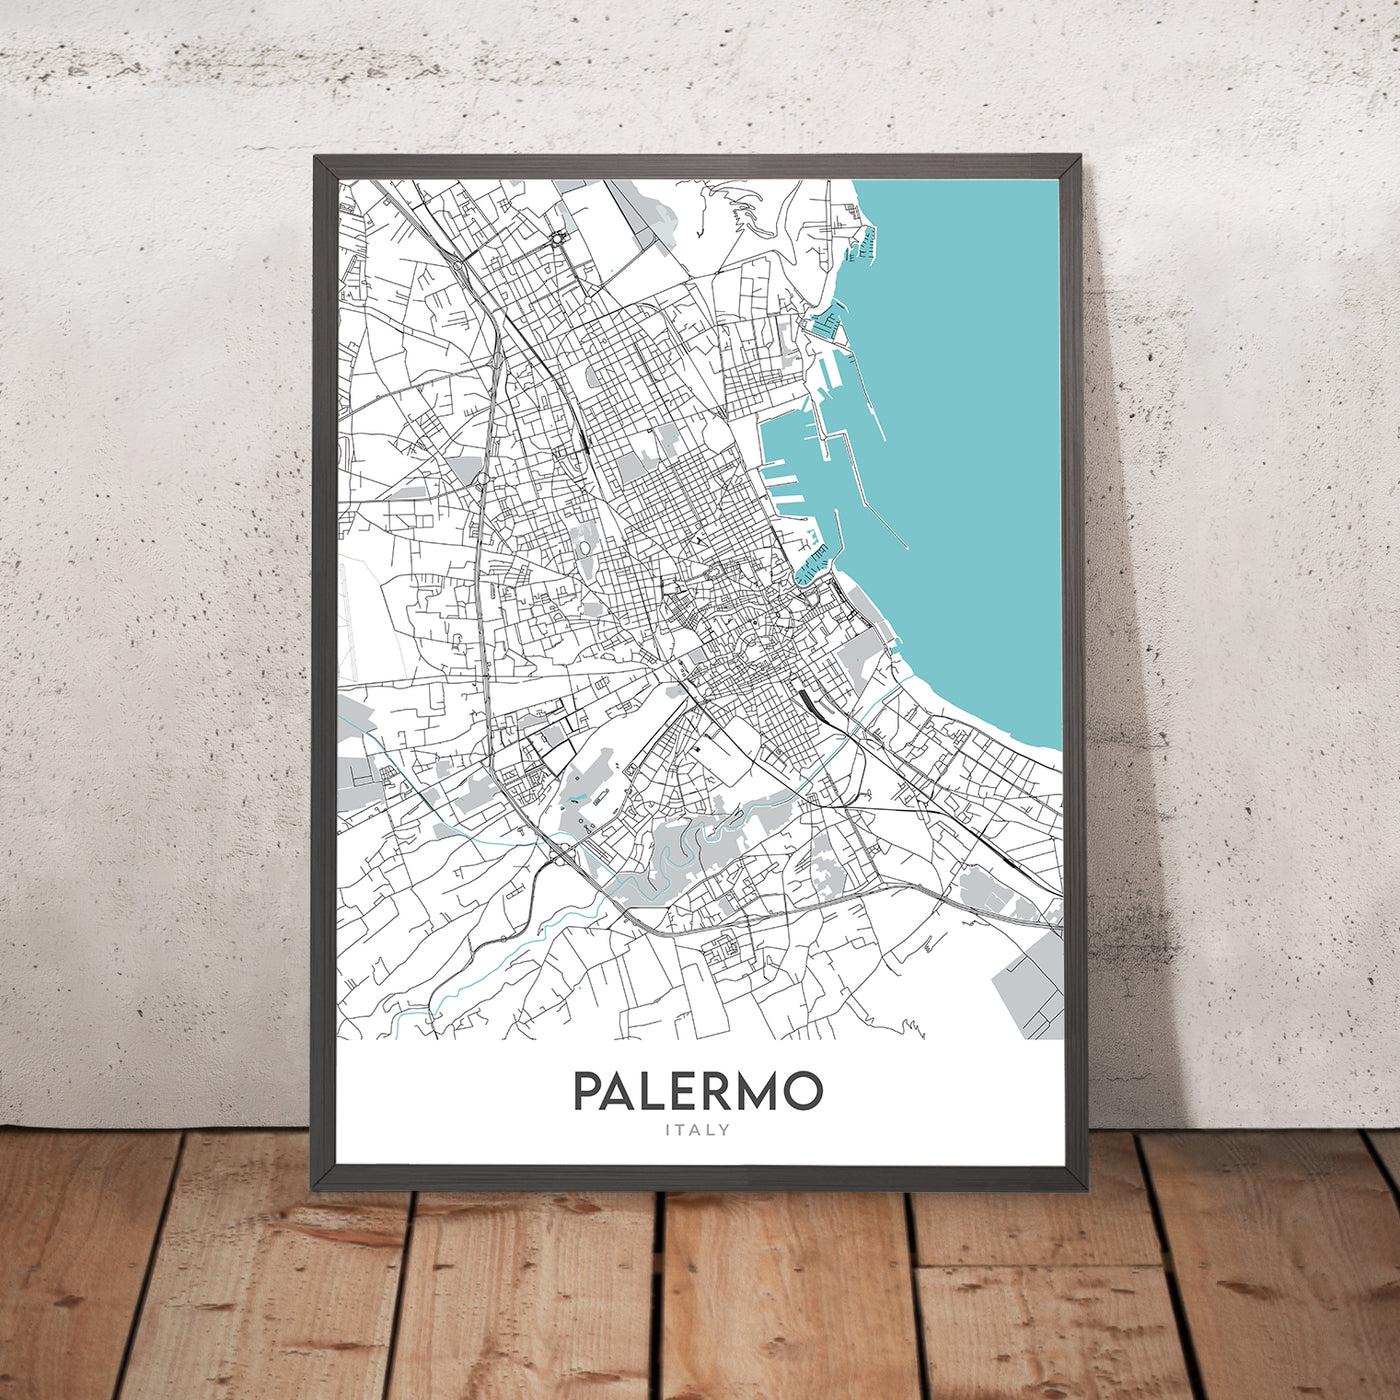 Plan de la ville moderne de Palerme, Italie : Albergheria, Kalsa, Teatro Massimo, Politeama, Quattro Canti